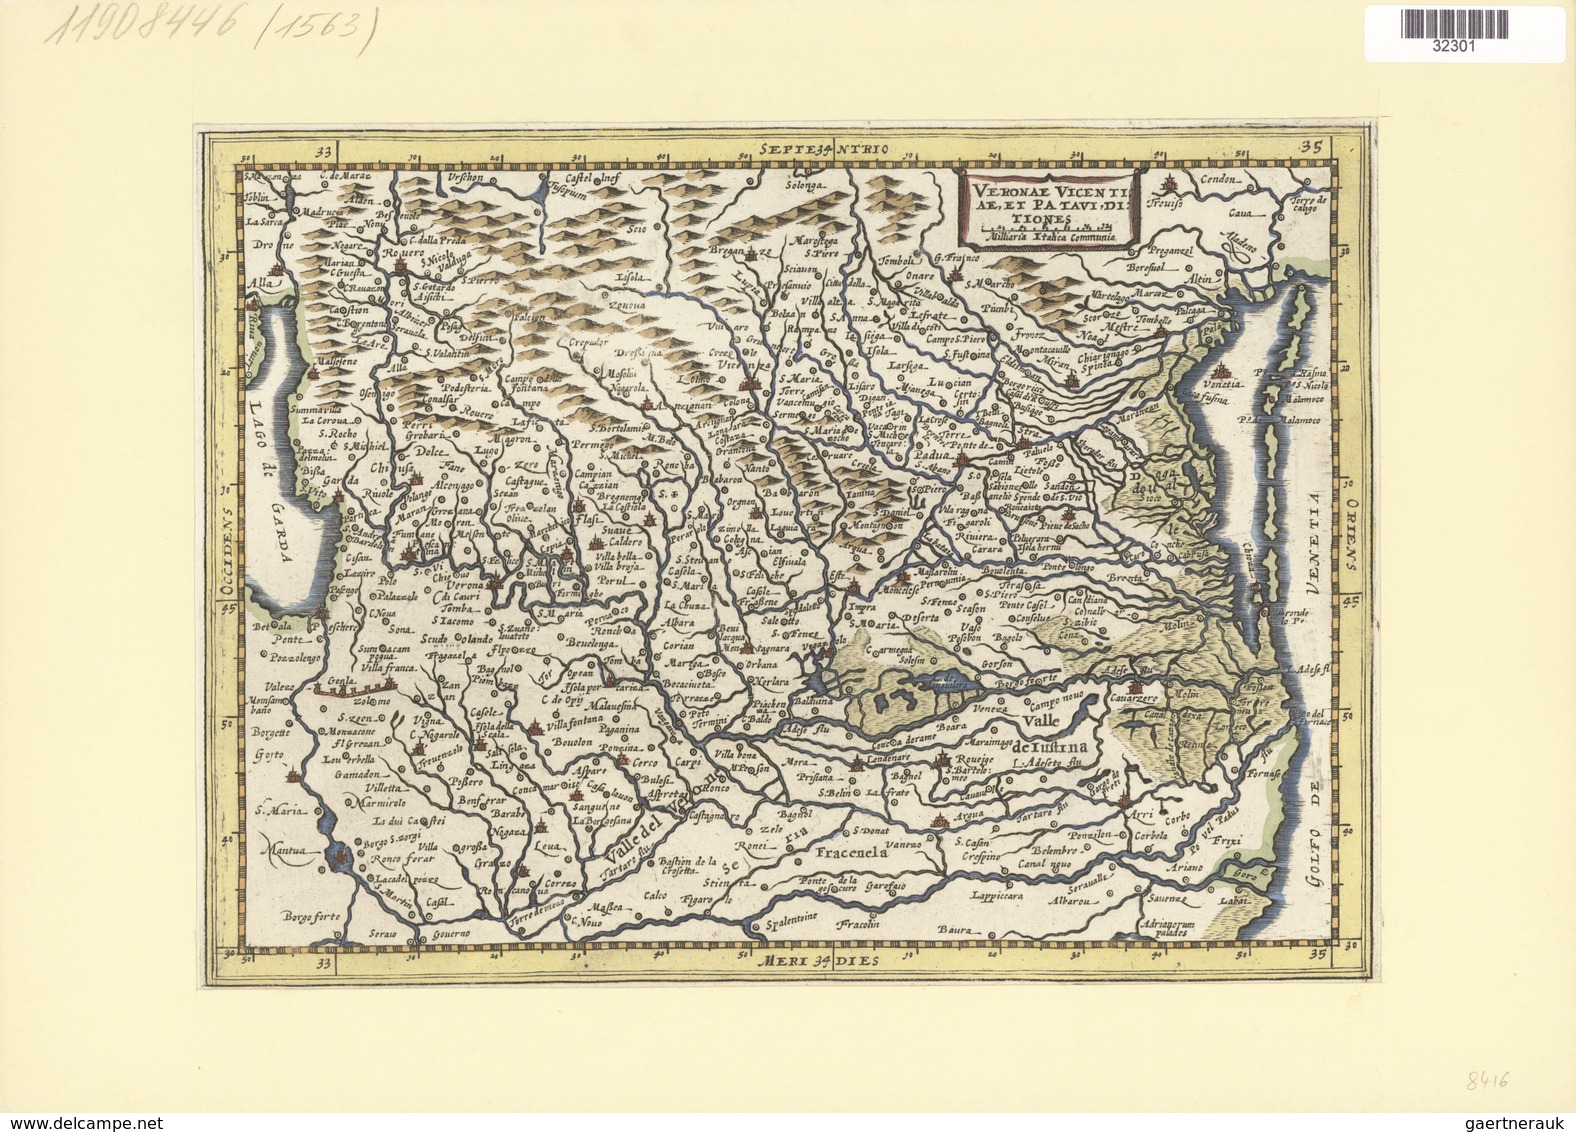 Landkarten Und Stiche: 1676 Map Of Italy From Lago Di Garda To The Lagoon Of Venice / Venezia, And F - Geography